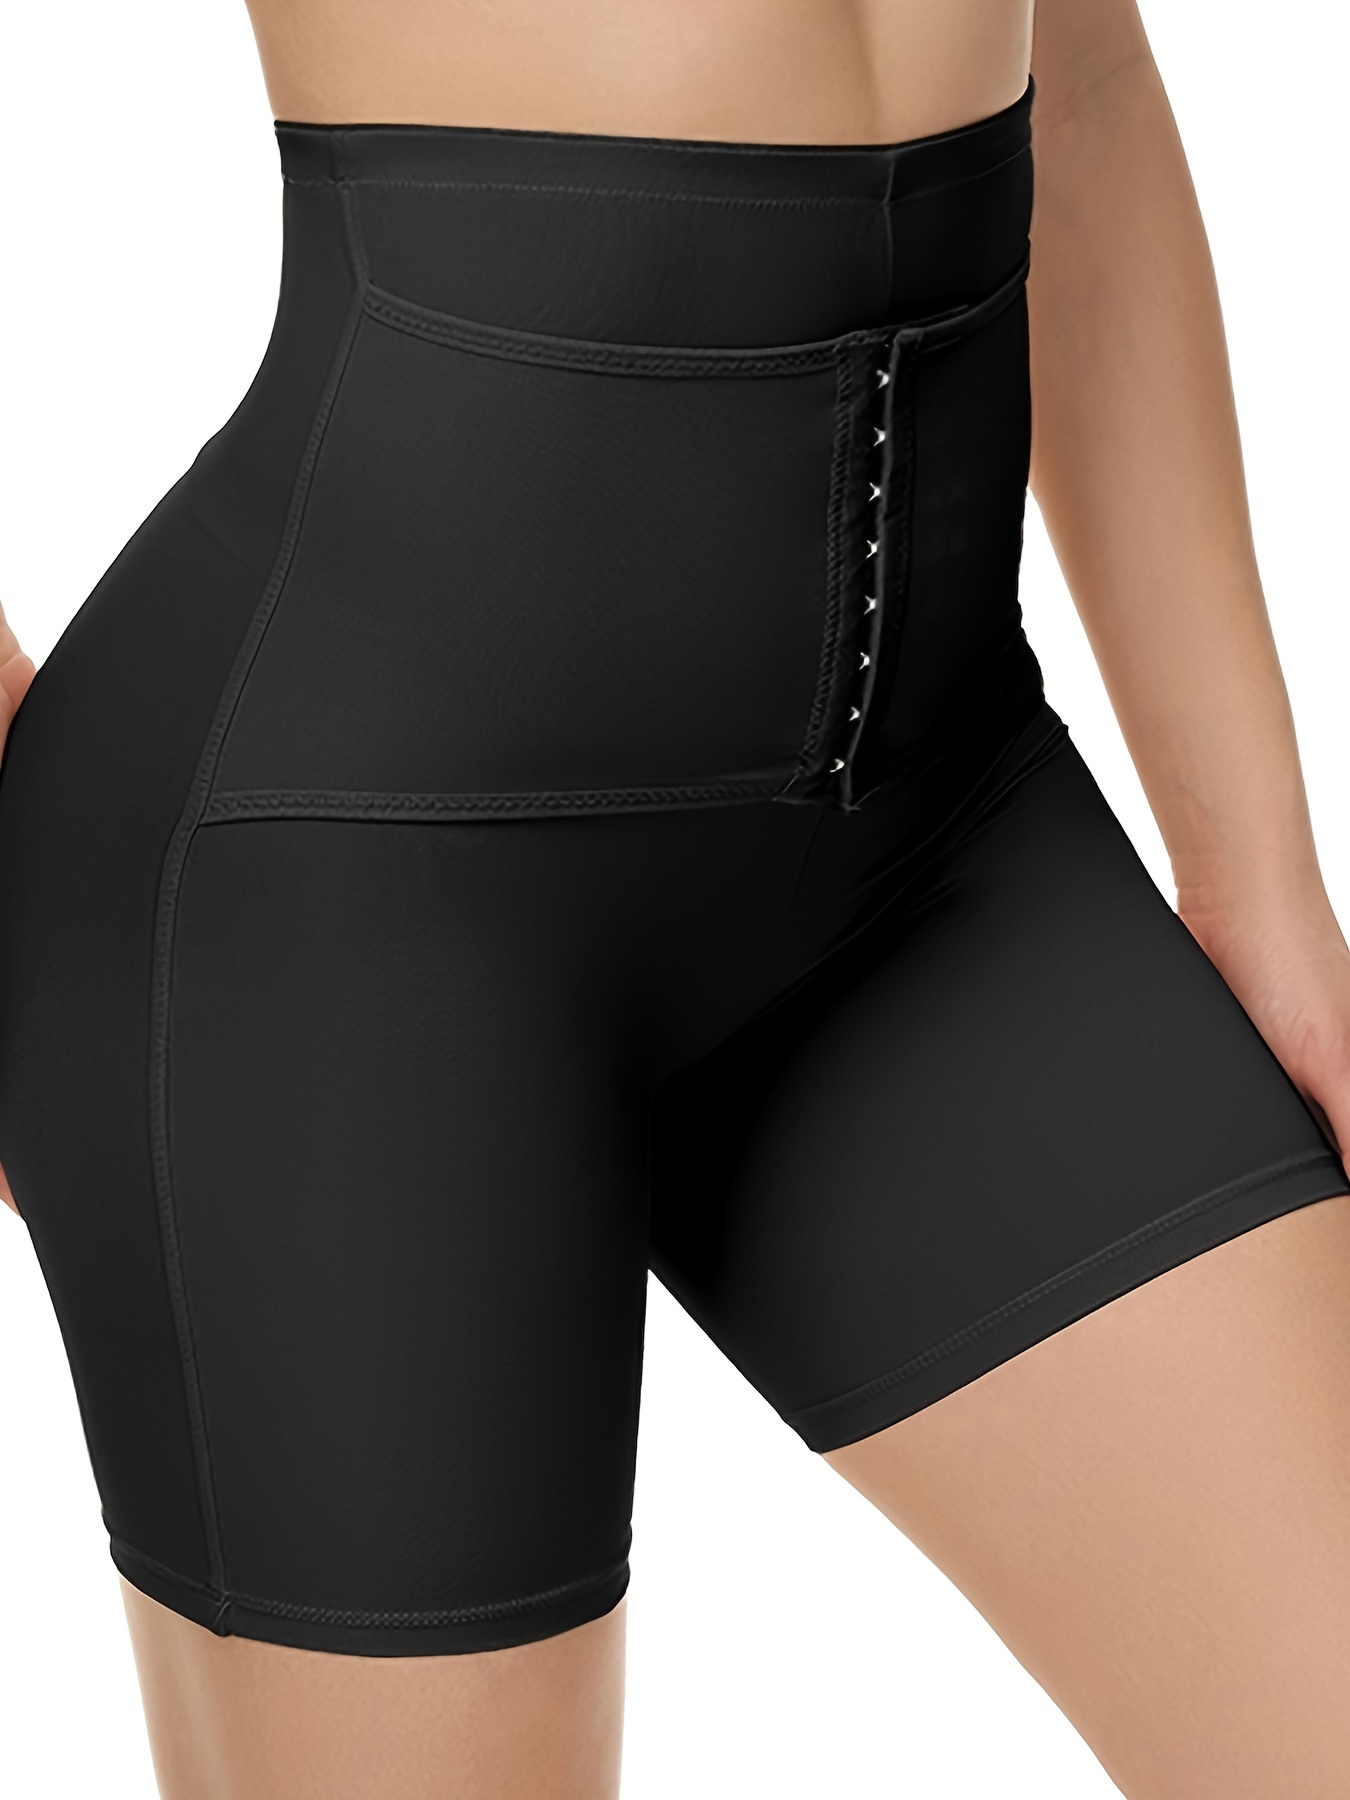 QRIC High Waist Corset Leggings for Women Waist Trainer Tummy Control Slim  Push Up Body Shaper Workout Yoga Pants (S-XL) 